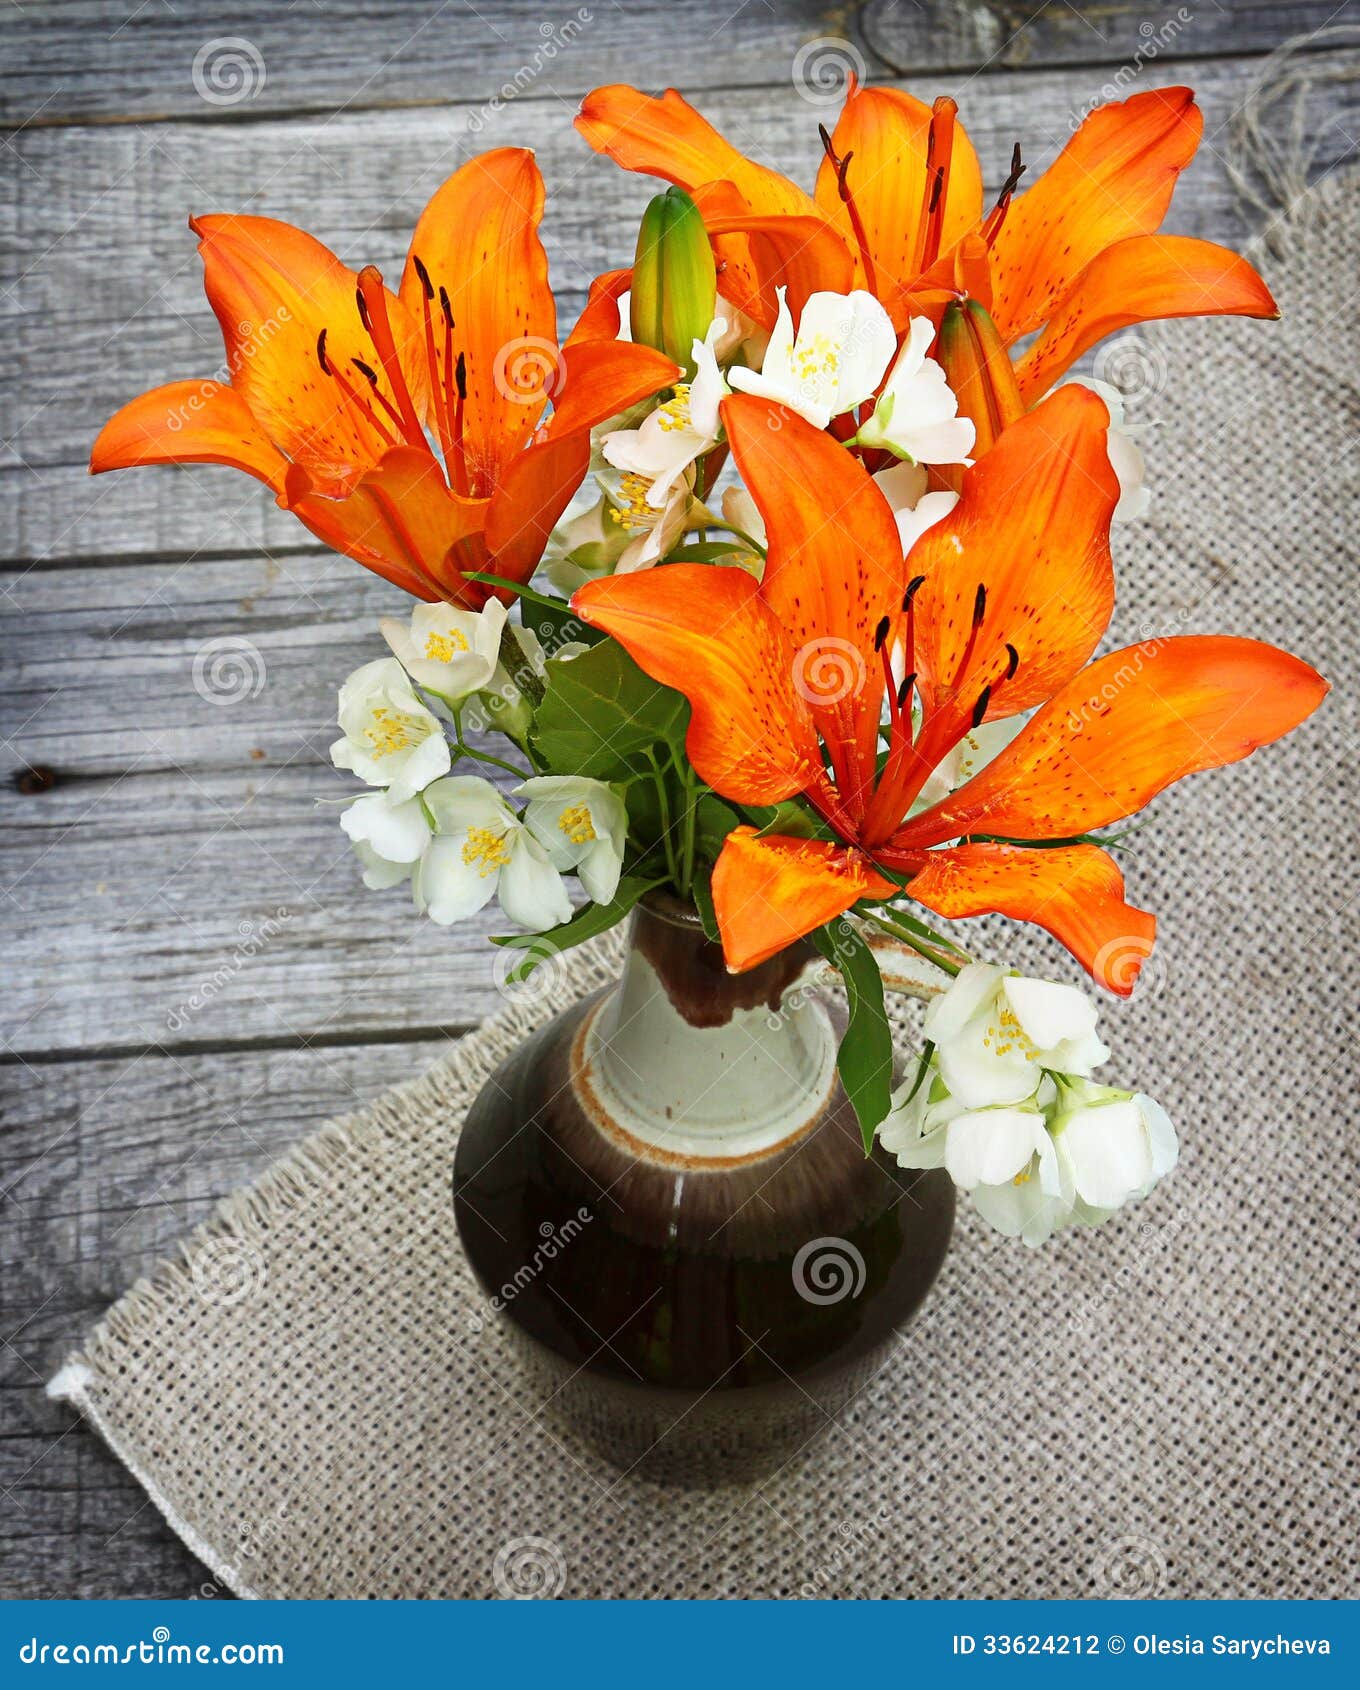 Orange Saffron Lilies And Jasmine Flowers On Wooden Table 